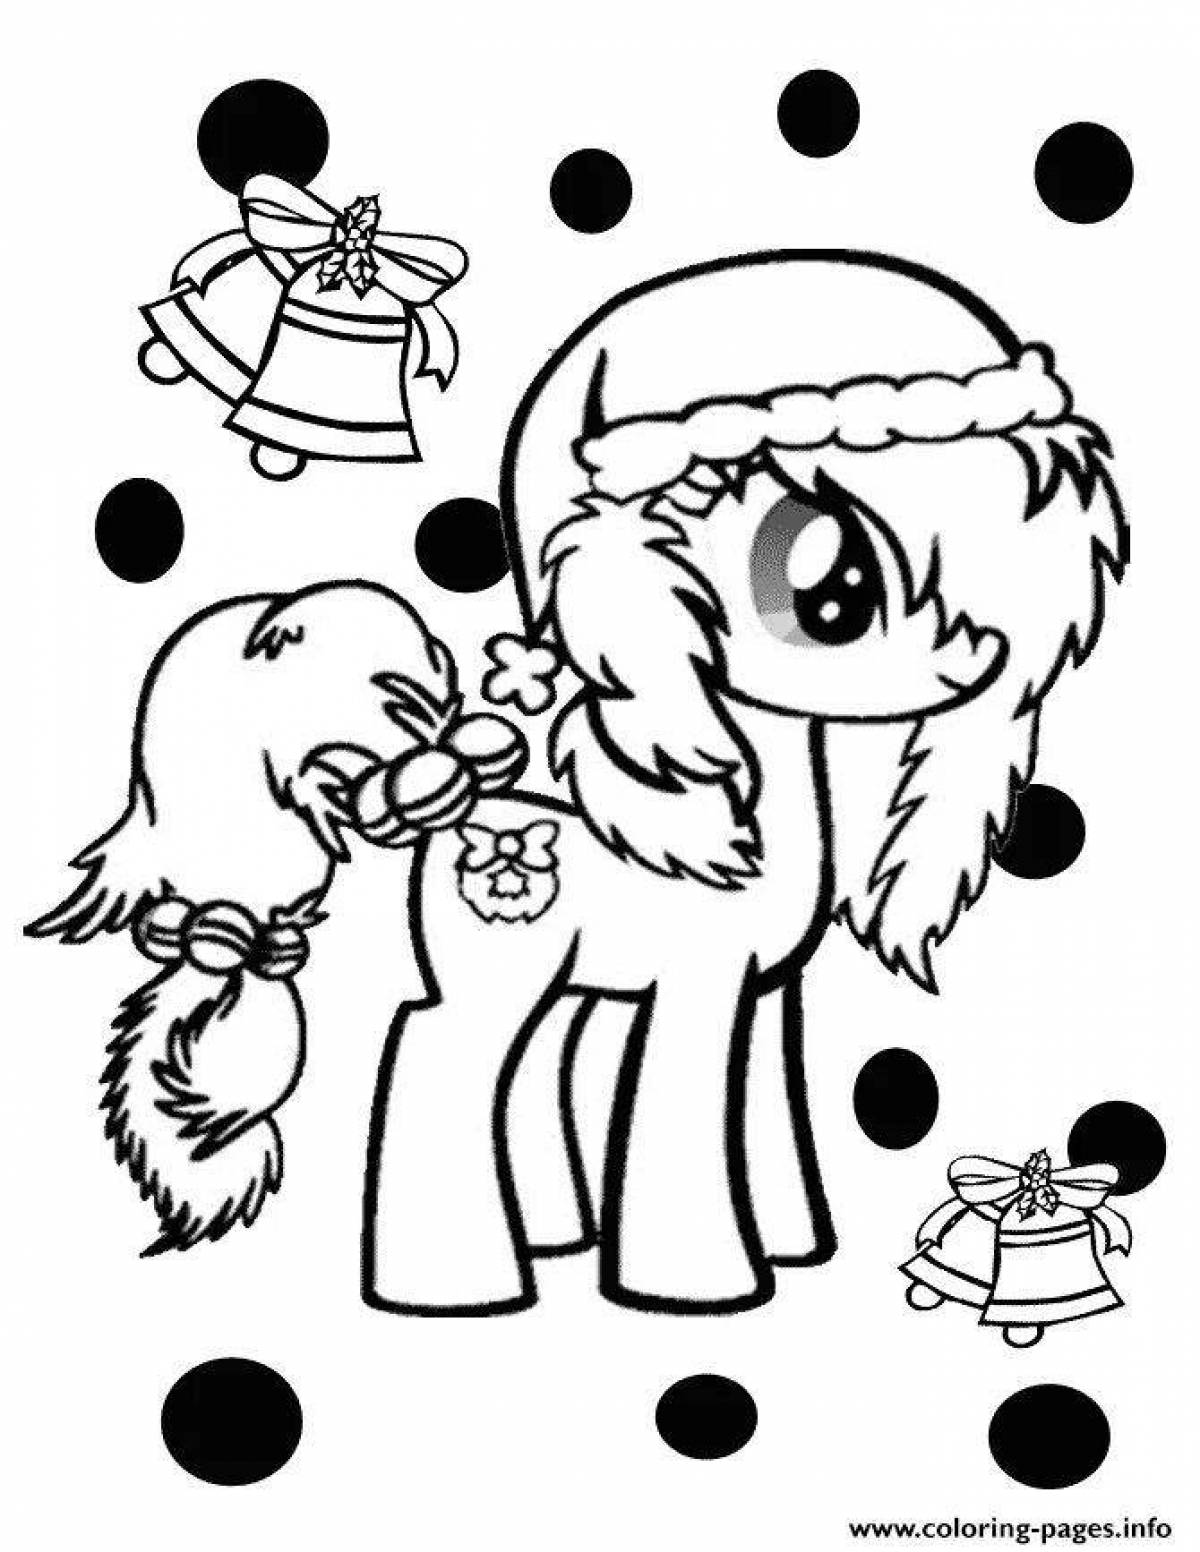 Christmas ponies #6